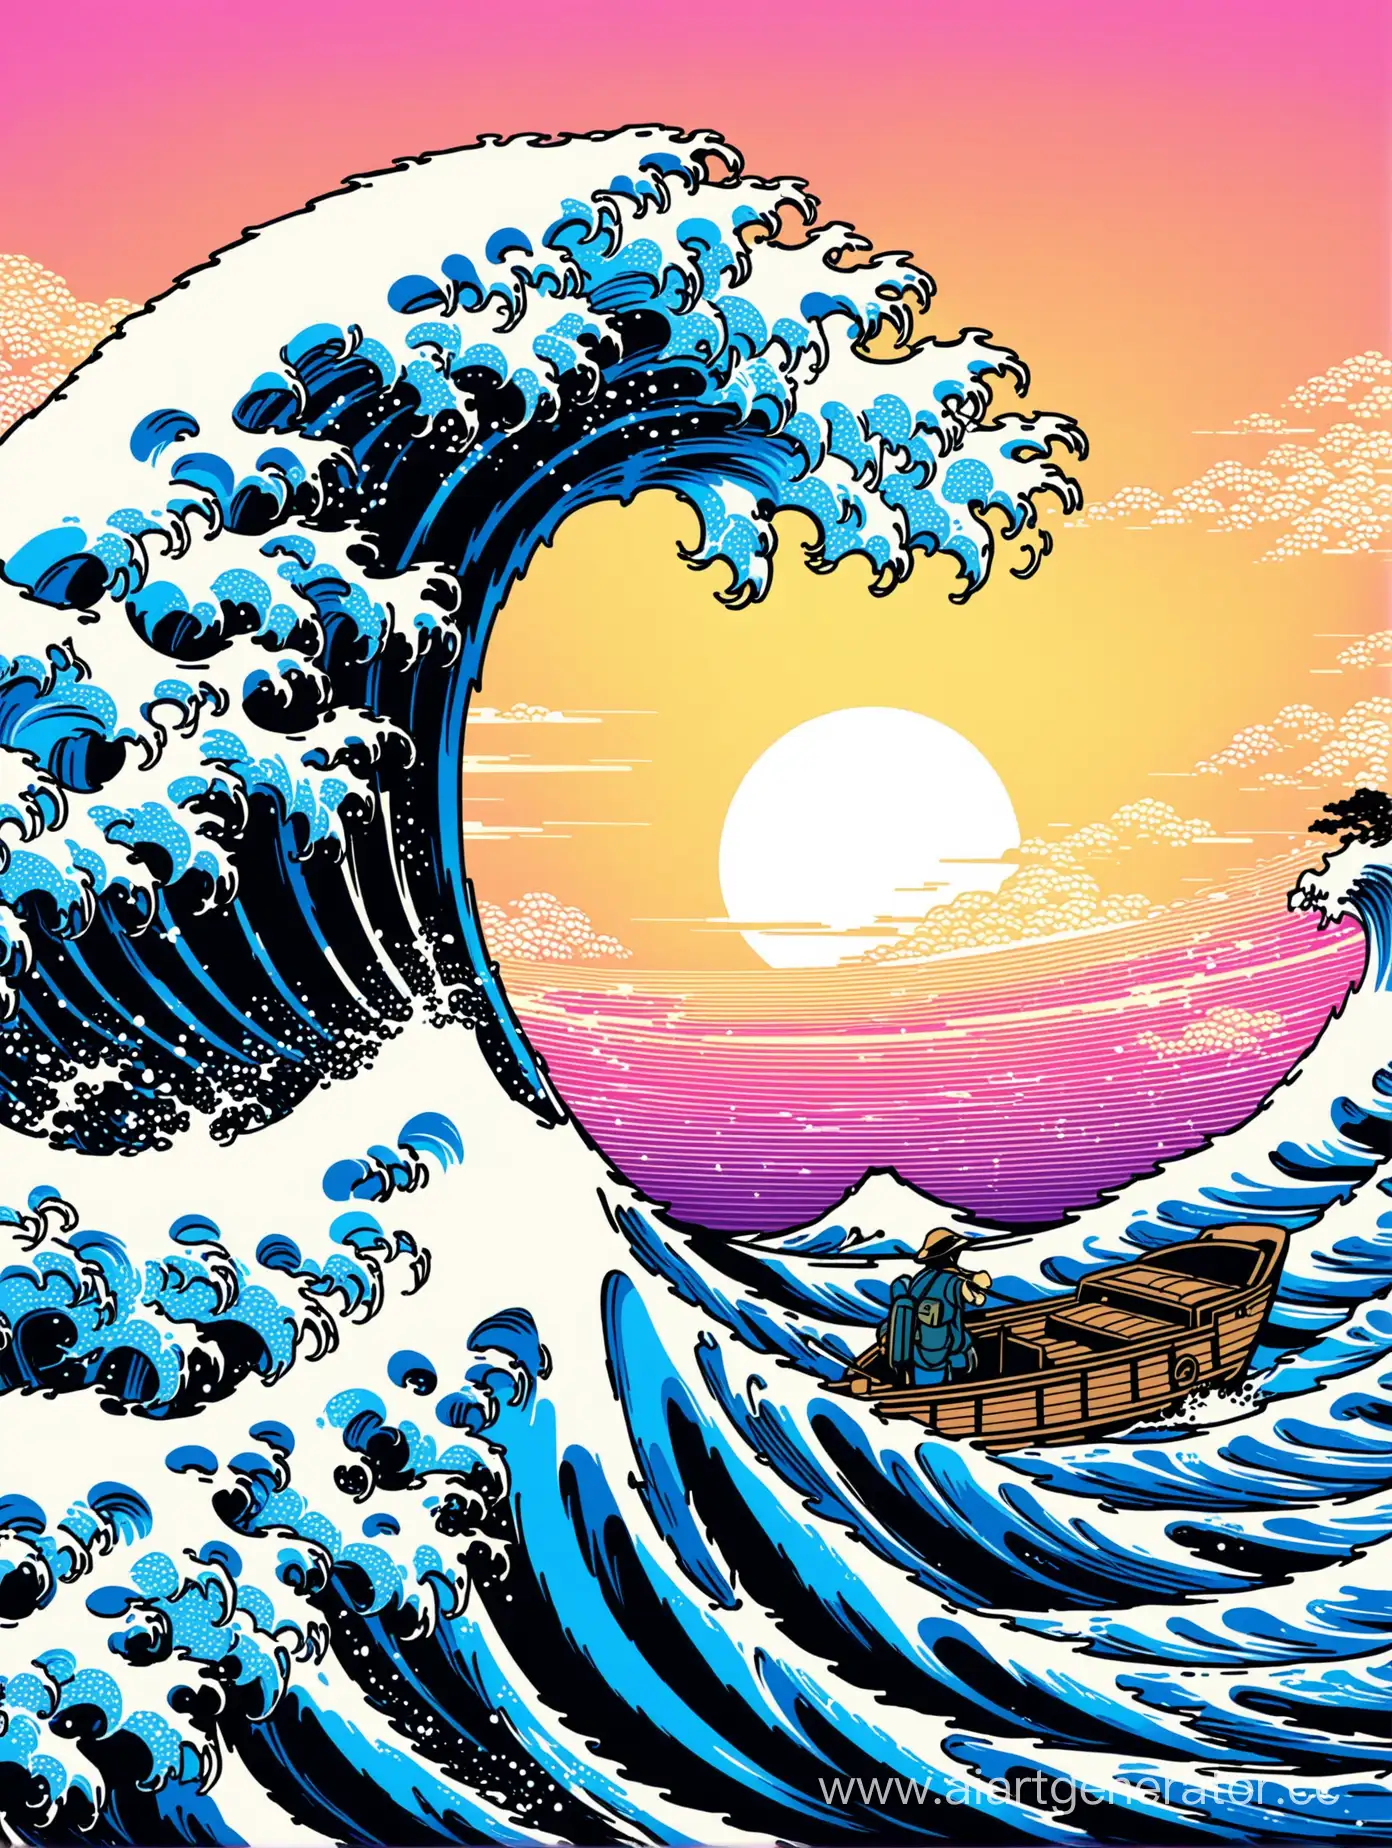 Psychedelic-Interpretation-of-The-Great-Wave-off-Kanagawa